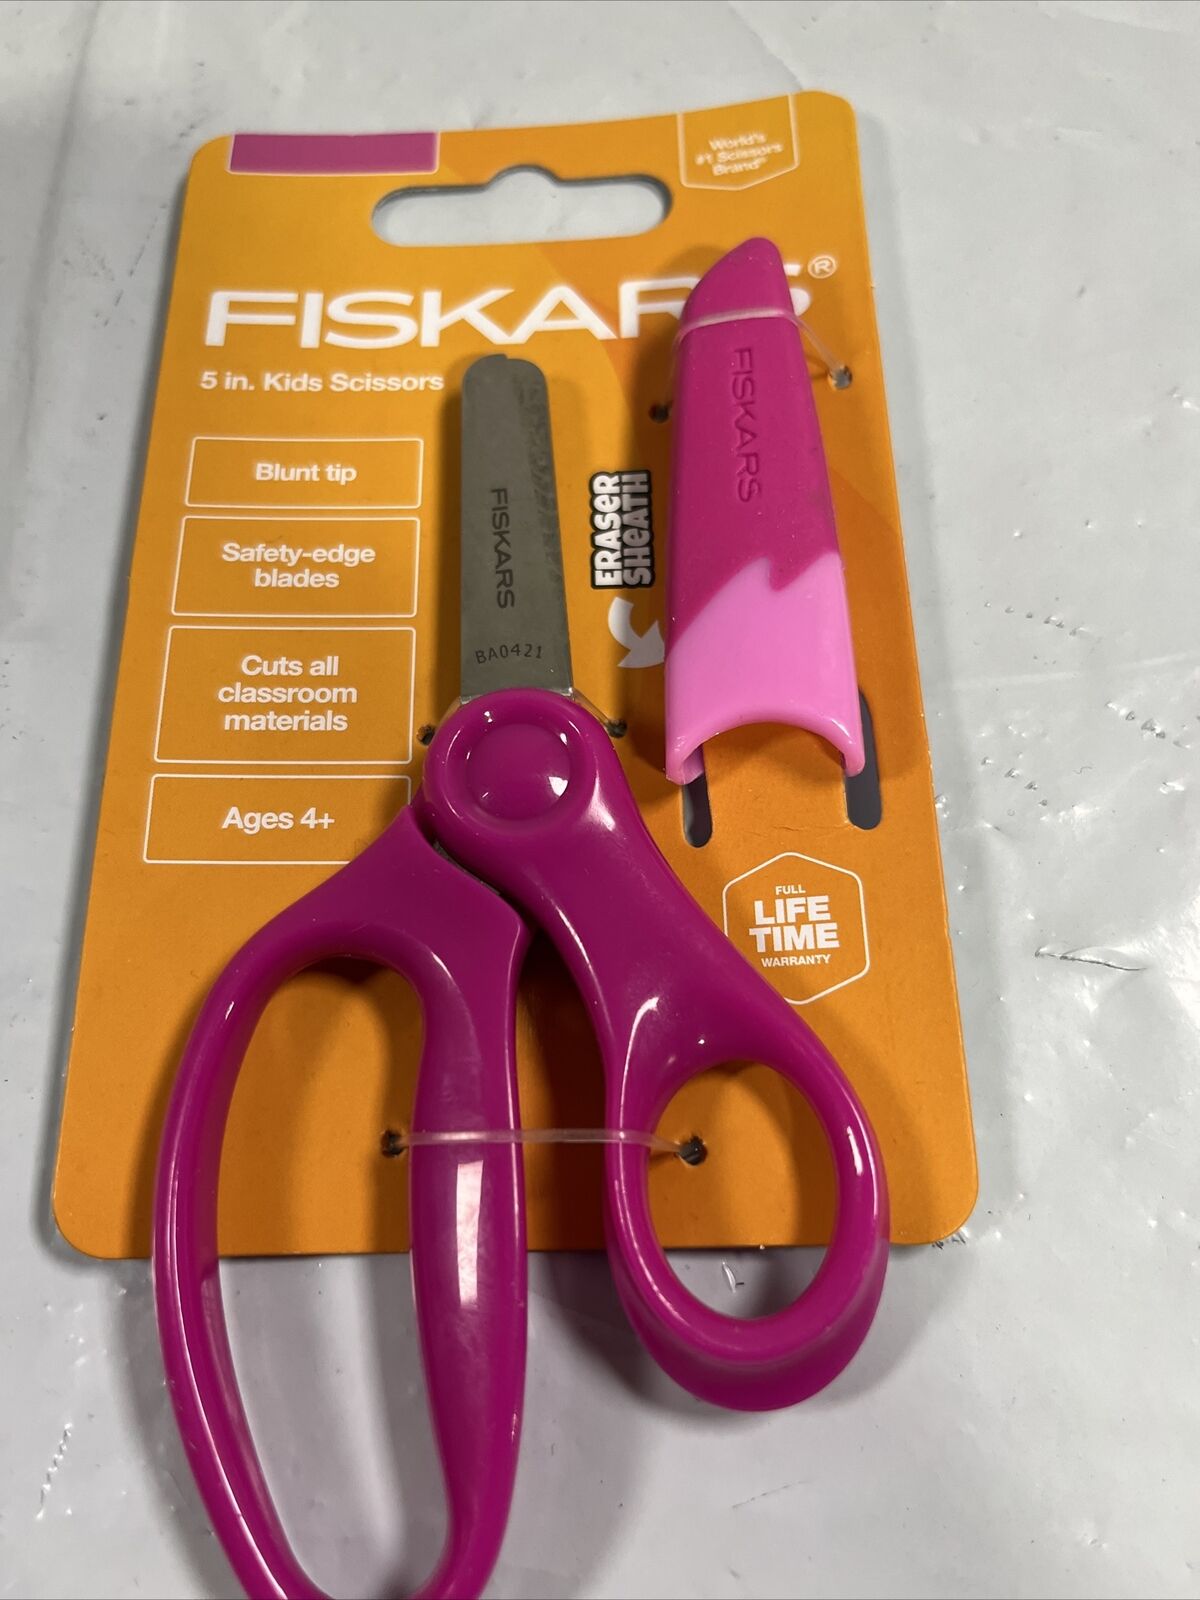 Fiskars 5 Blunt Kids Scissors with Eraser Sheath, Purple (Ages 4+)